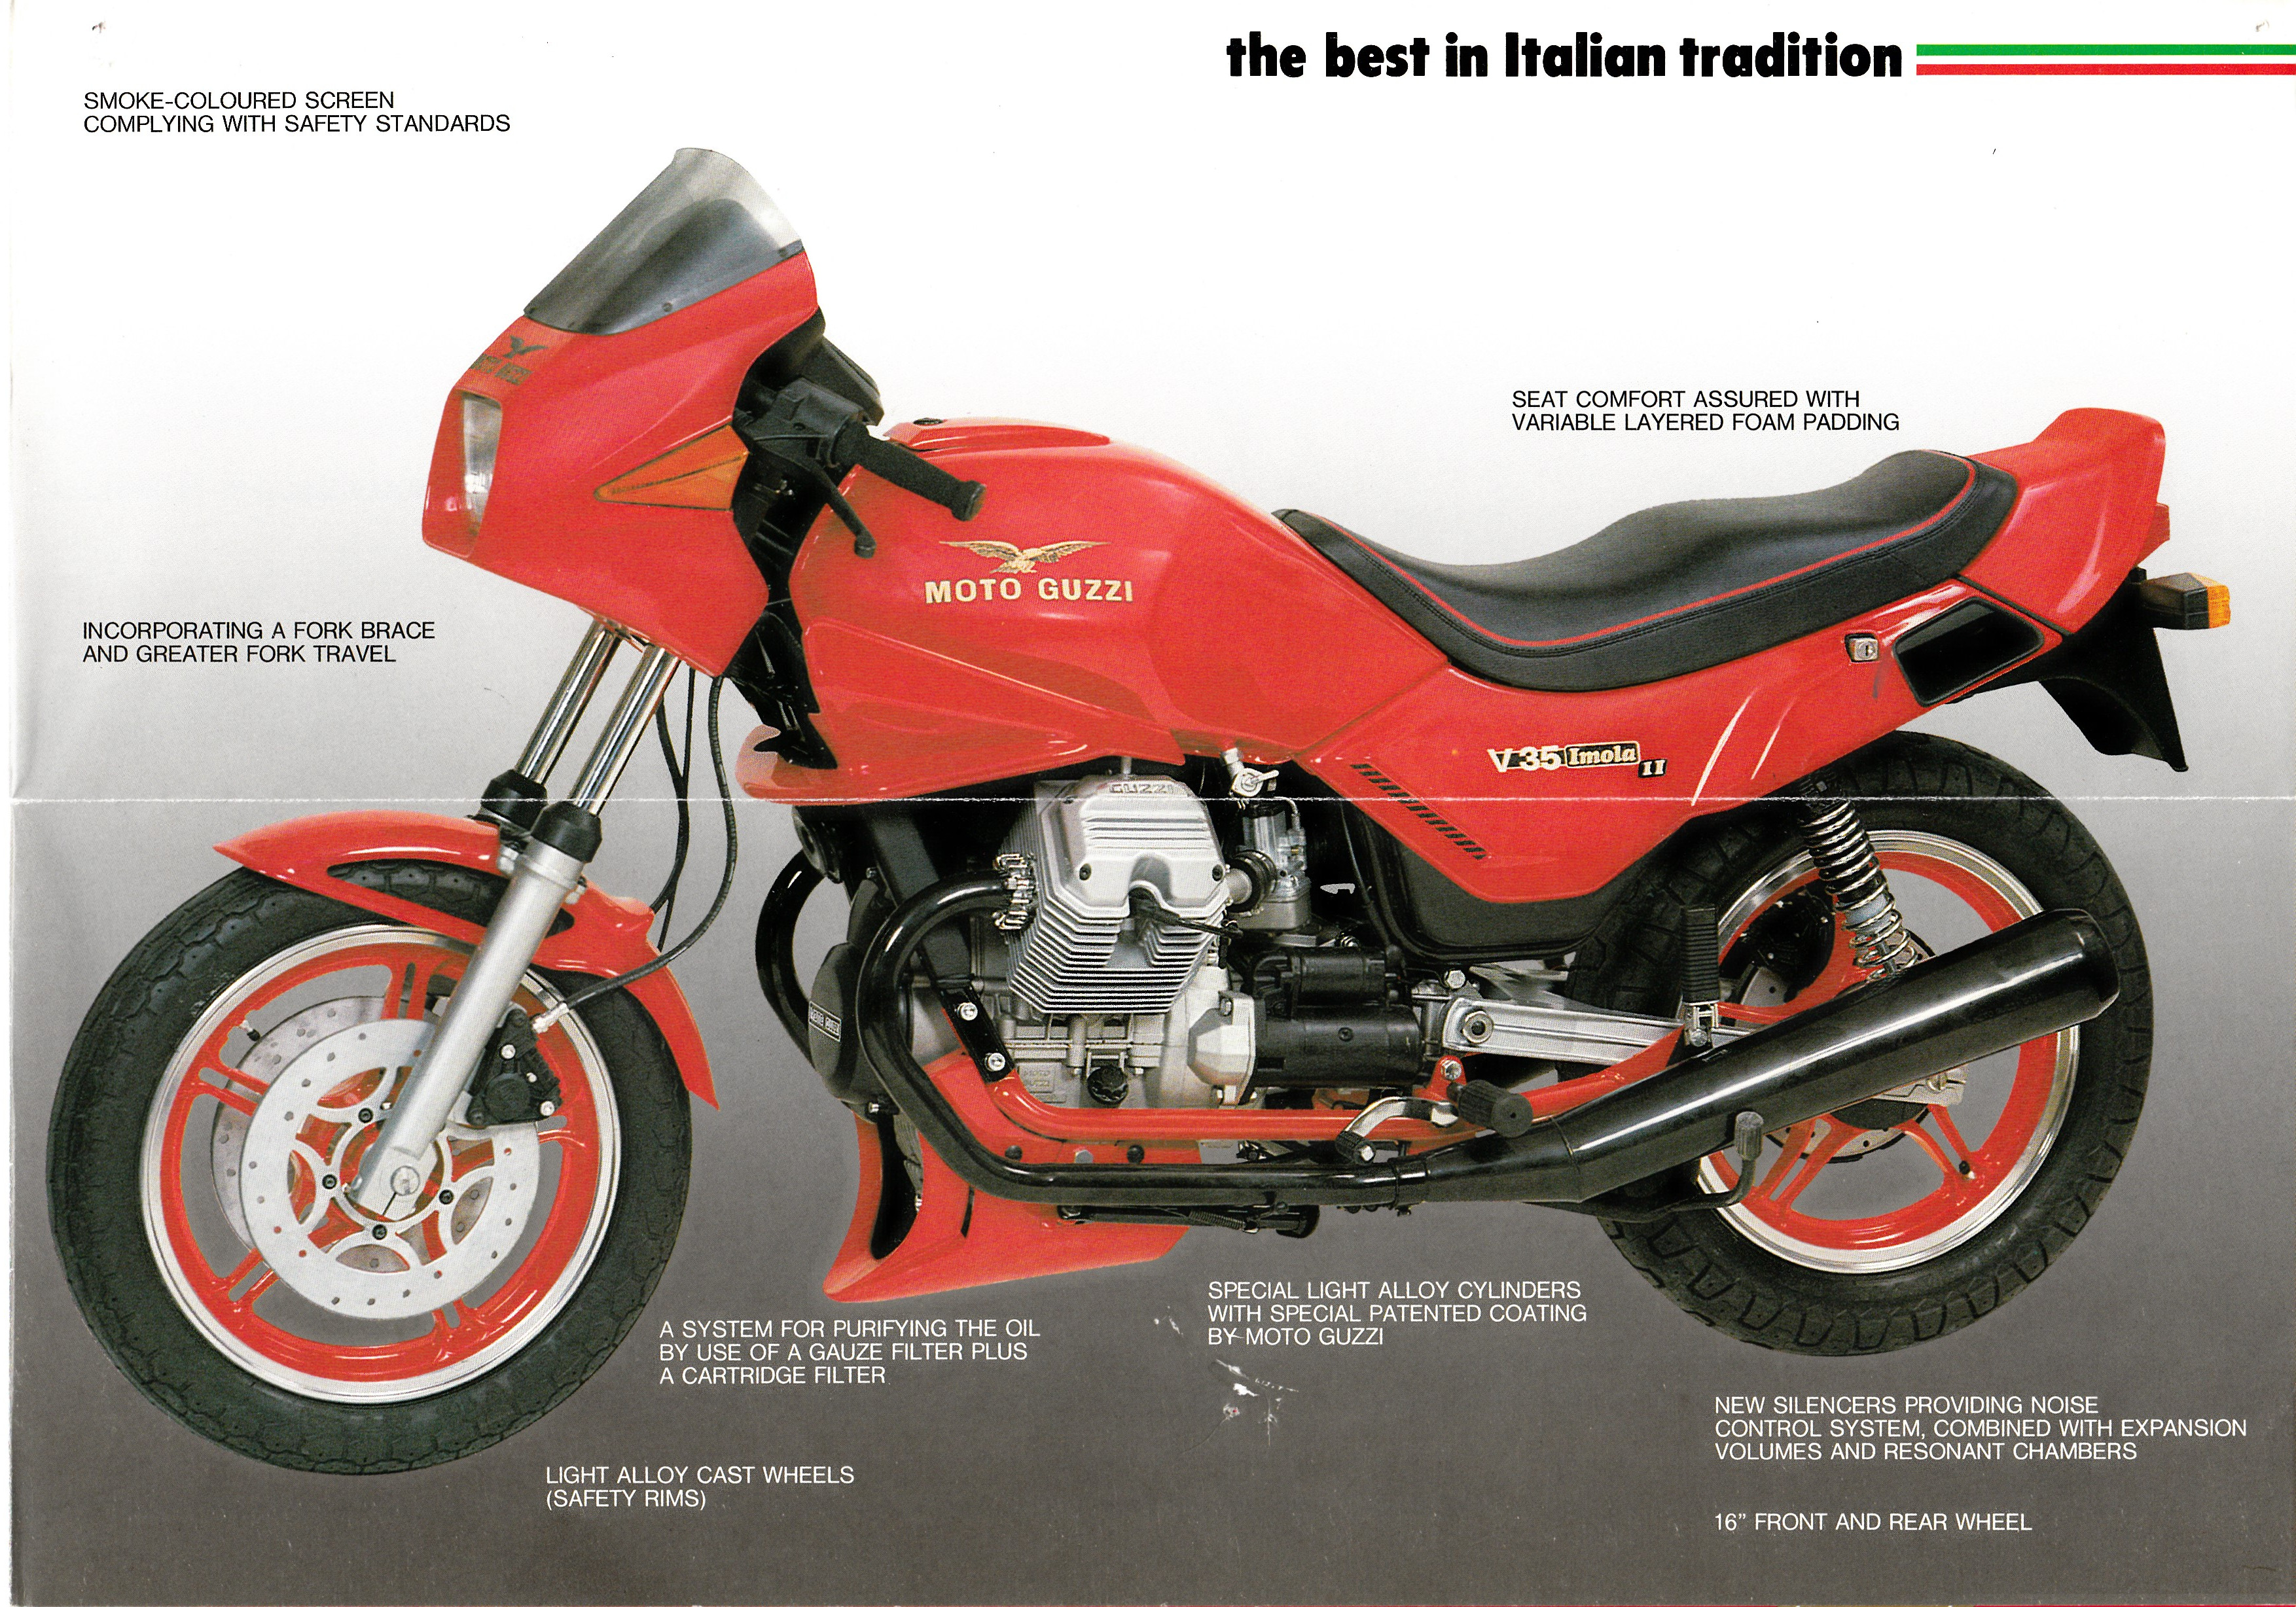 Brochure - Moto Guzzi V35 Imola and II V50 Monza II (folded style brochure)